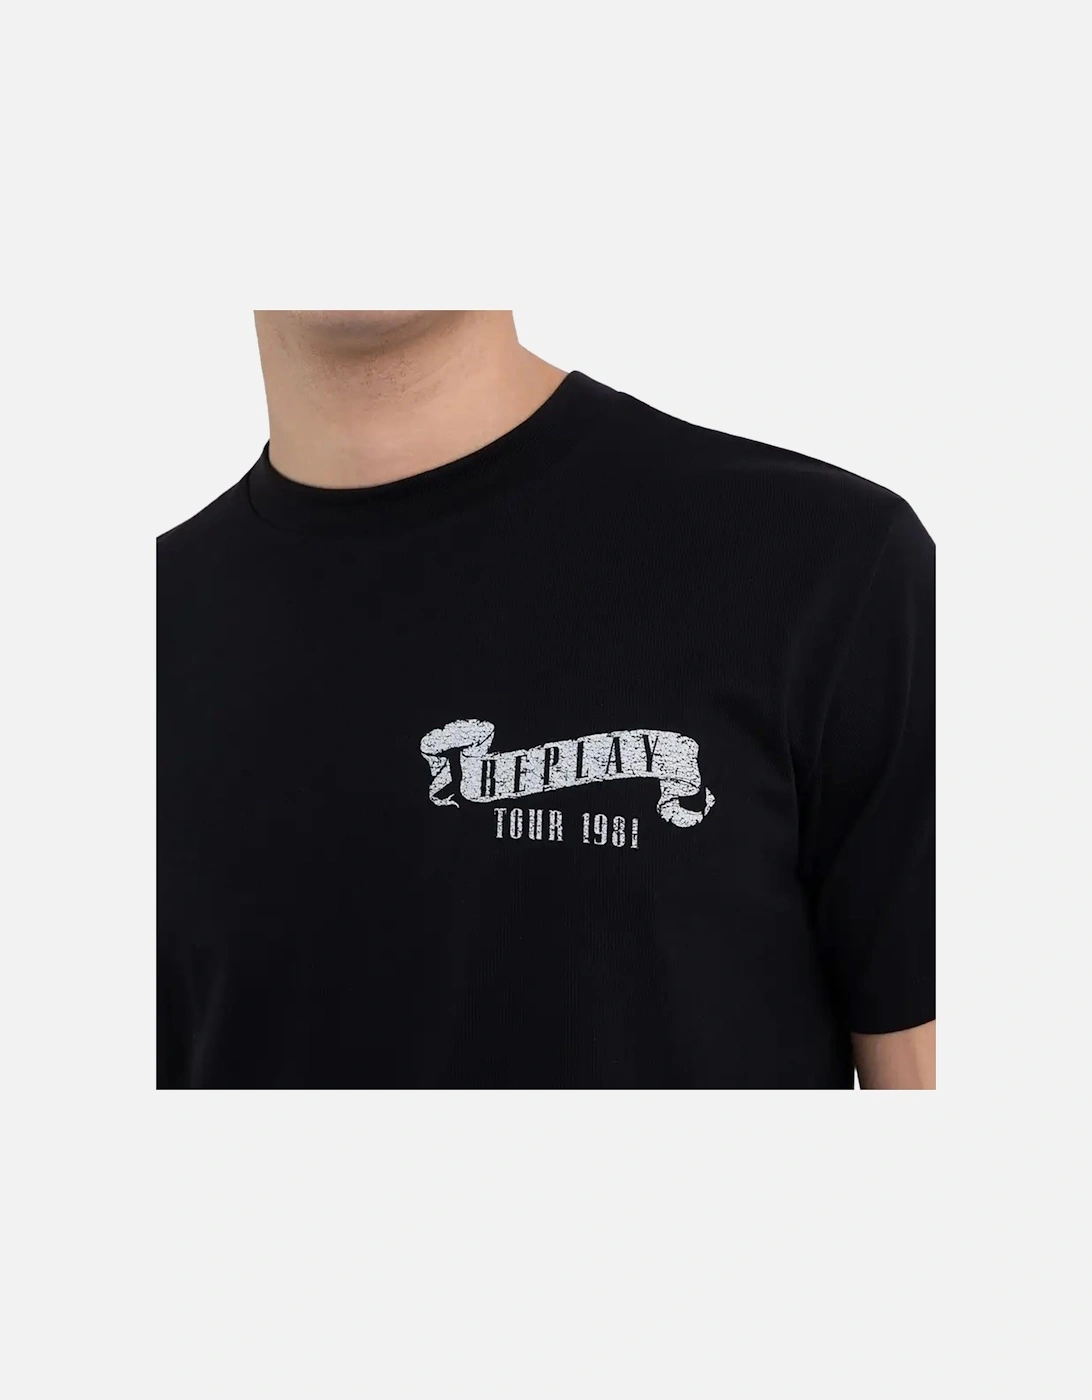 Mens Tour 1981 T-Shirt (Black)